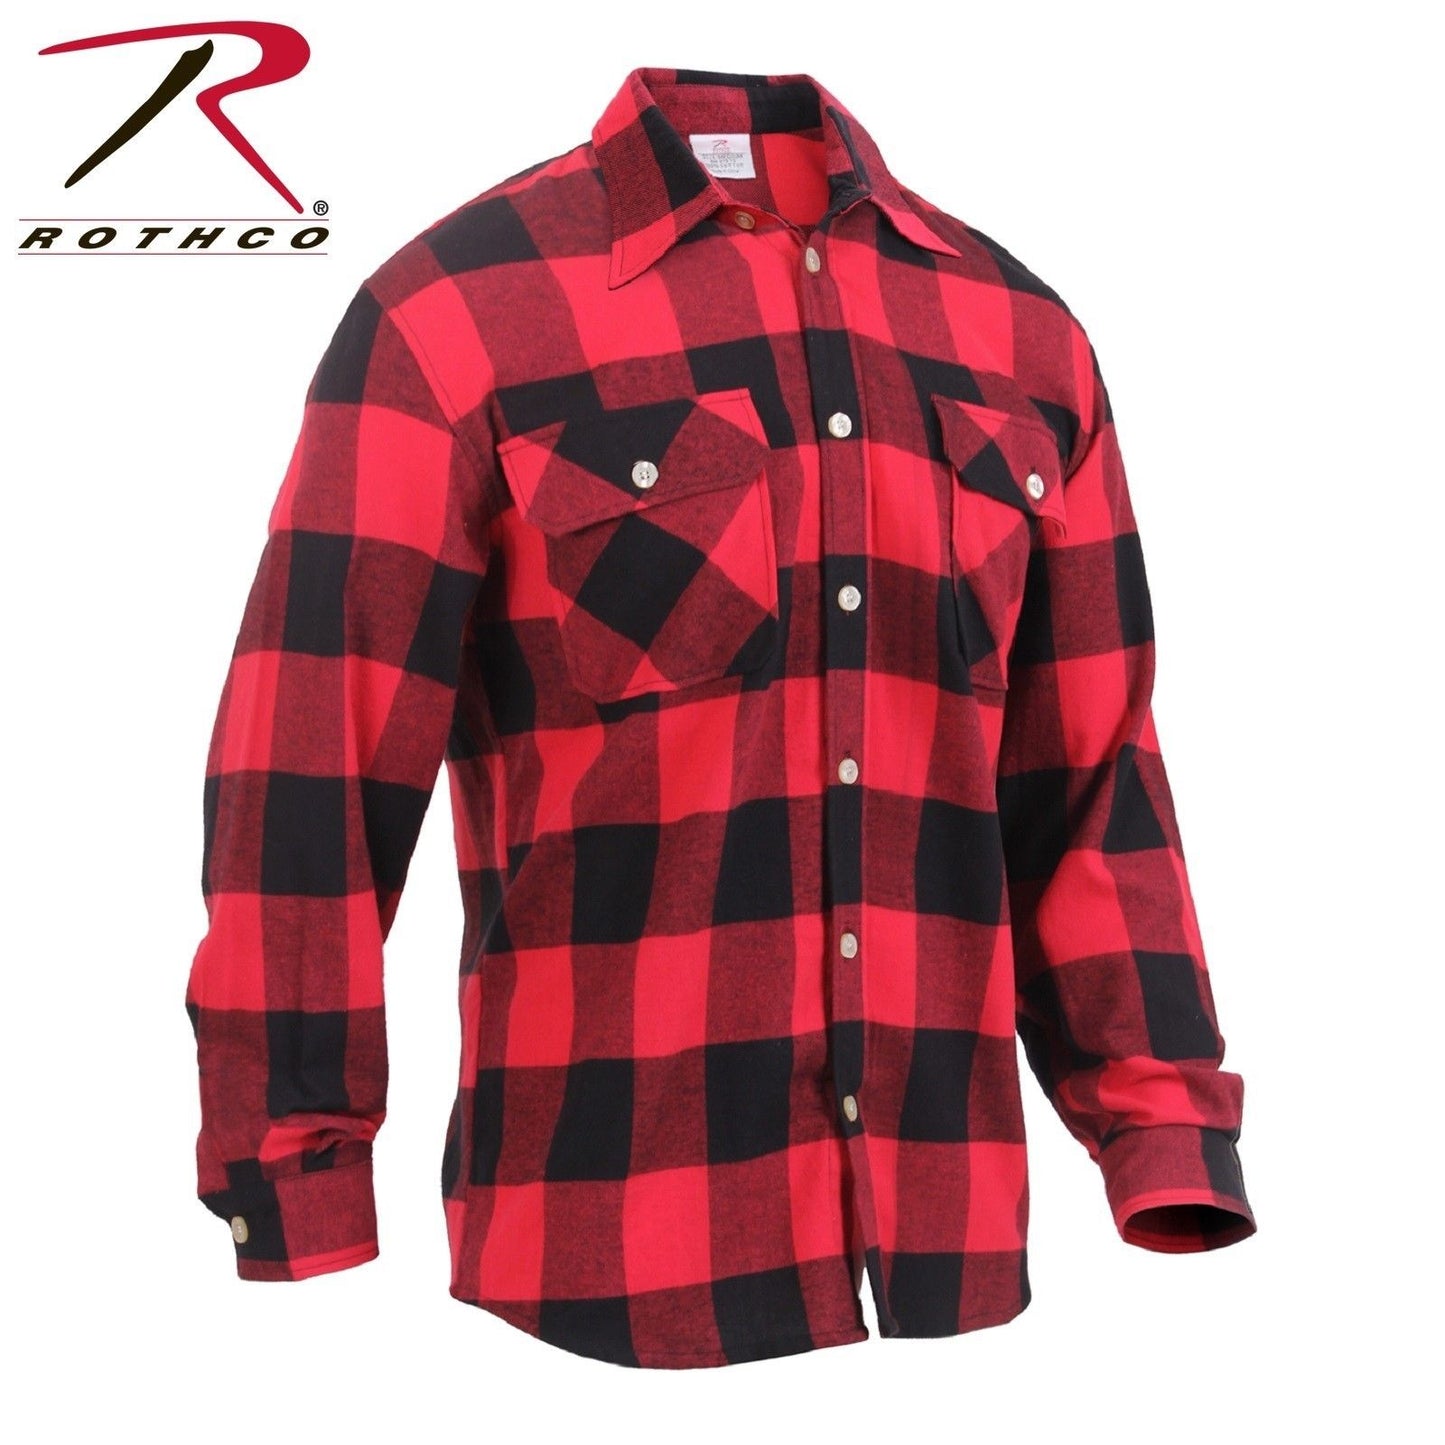 Men's Red/Black Lightweight Flannel Shirt - Rothco Lightweight Cotton Flannel